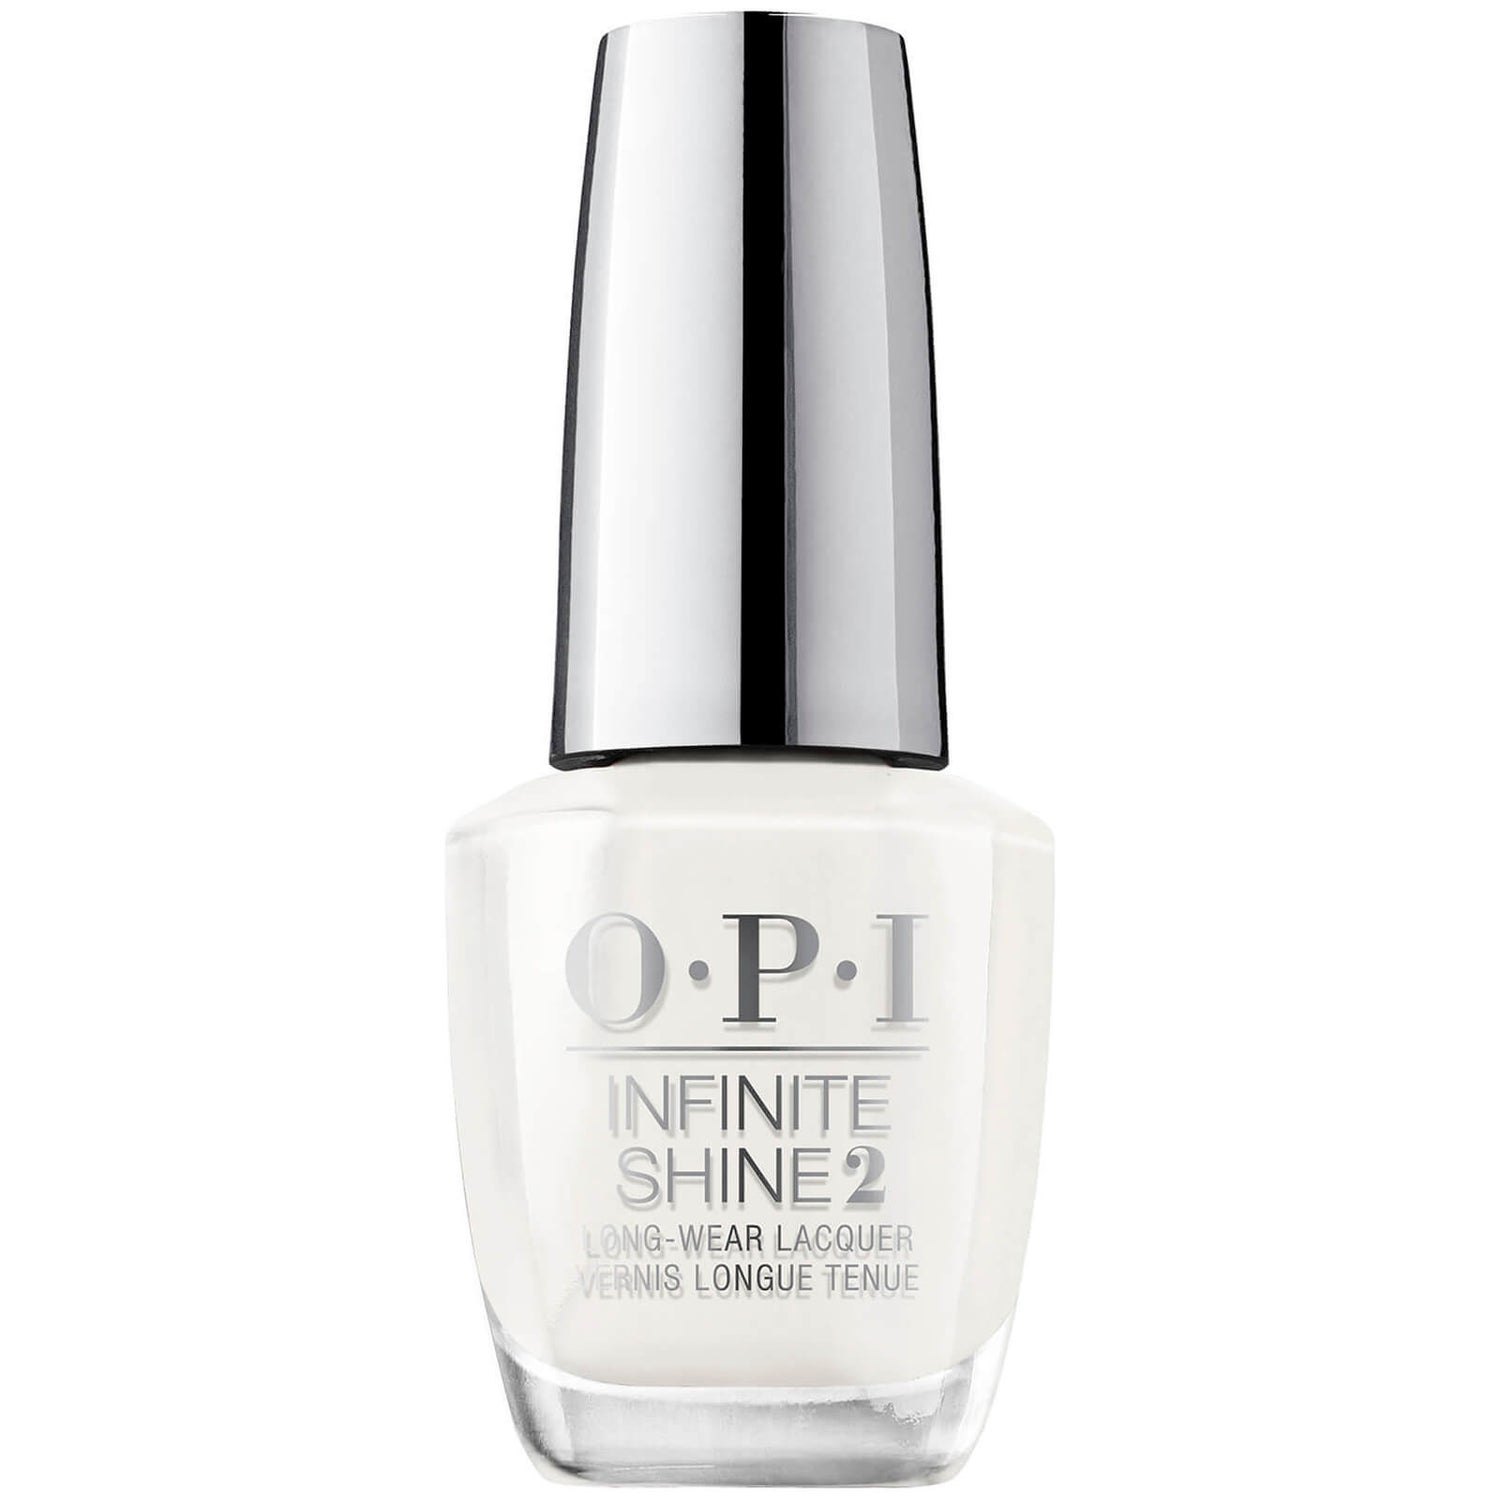 OPI Infinite Shine - Funny Bunny 15ml